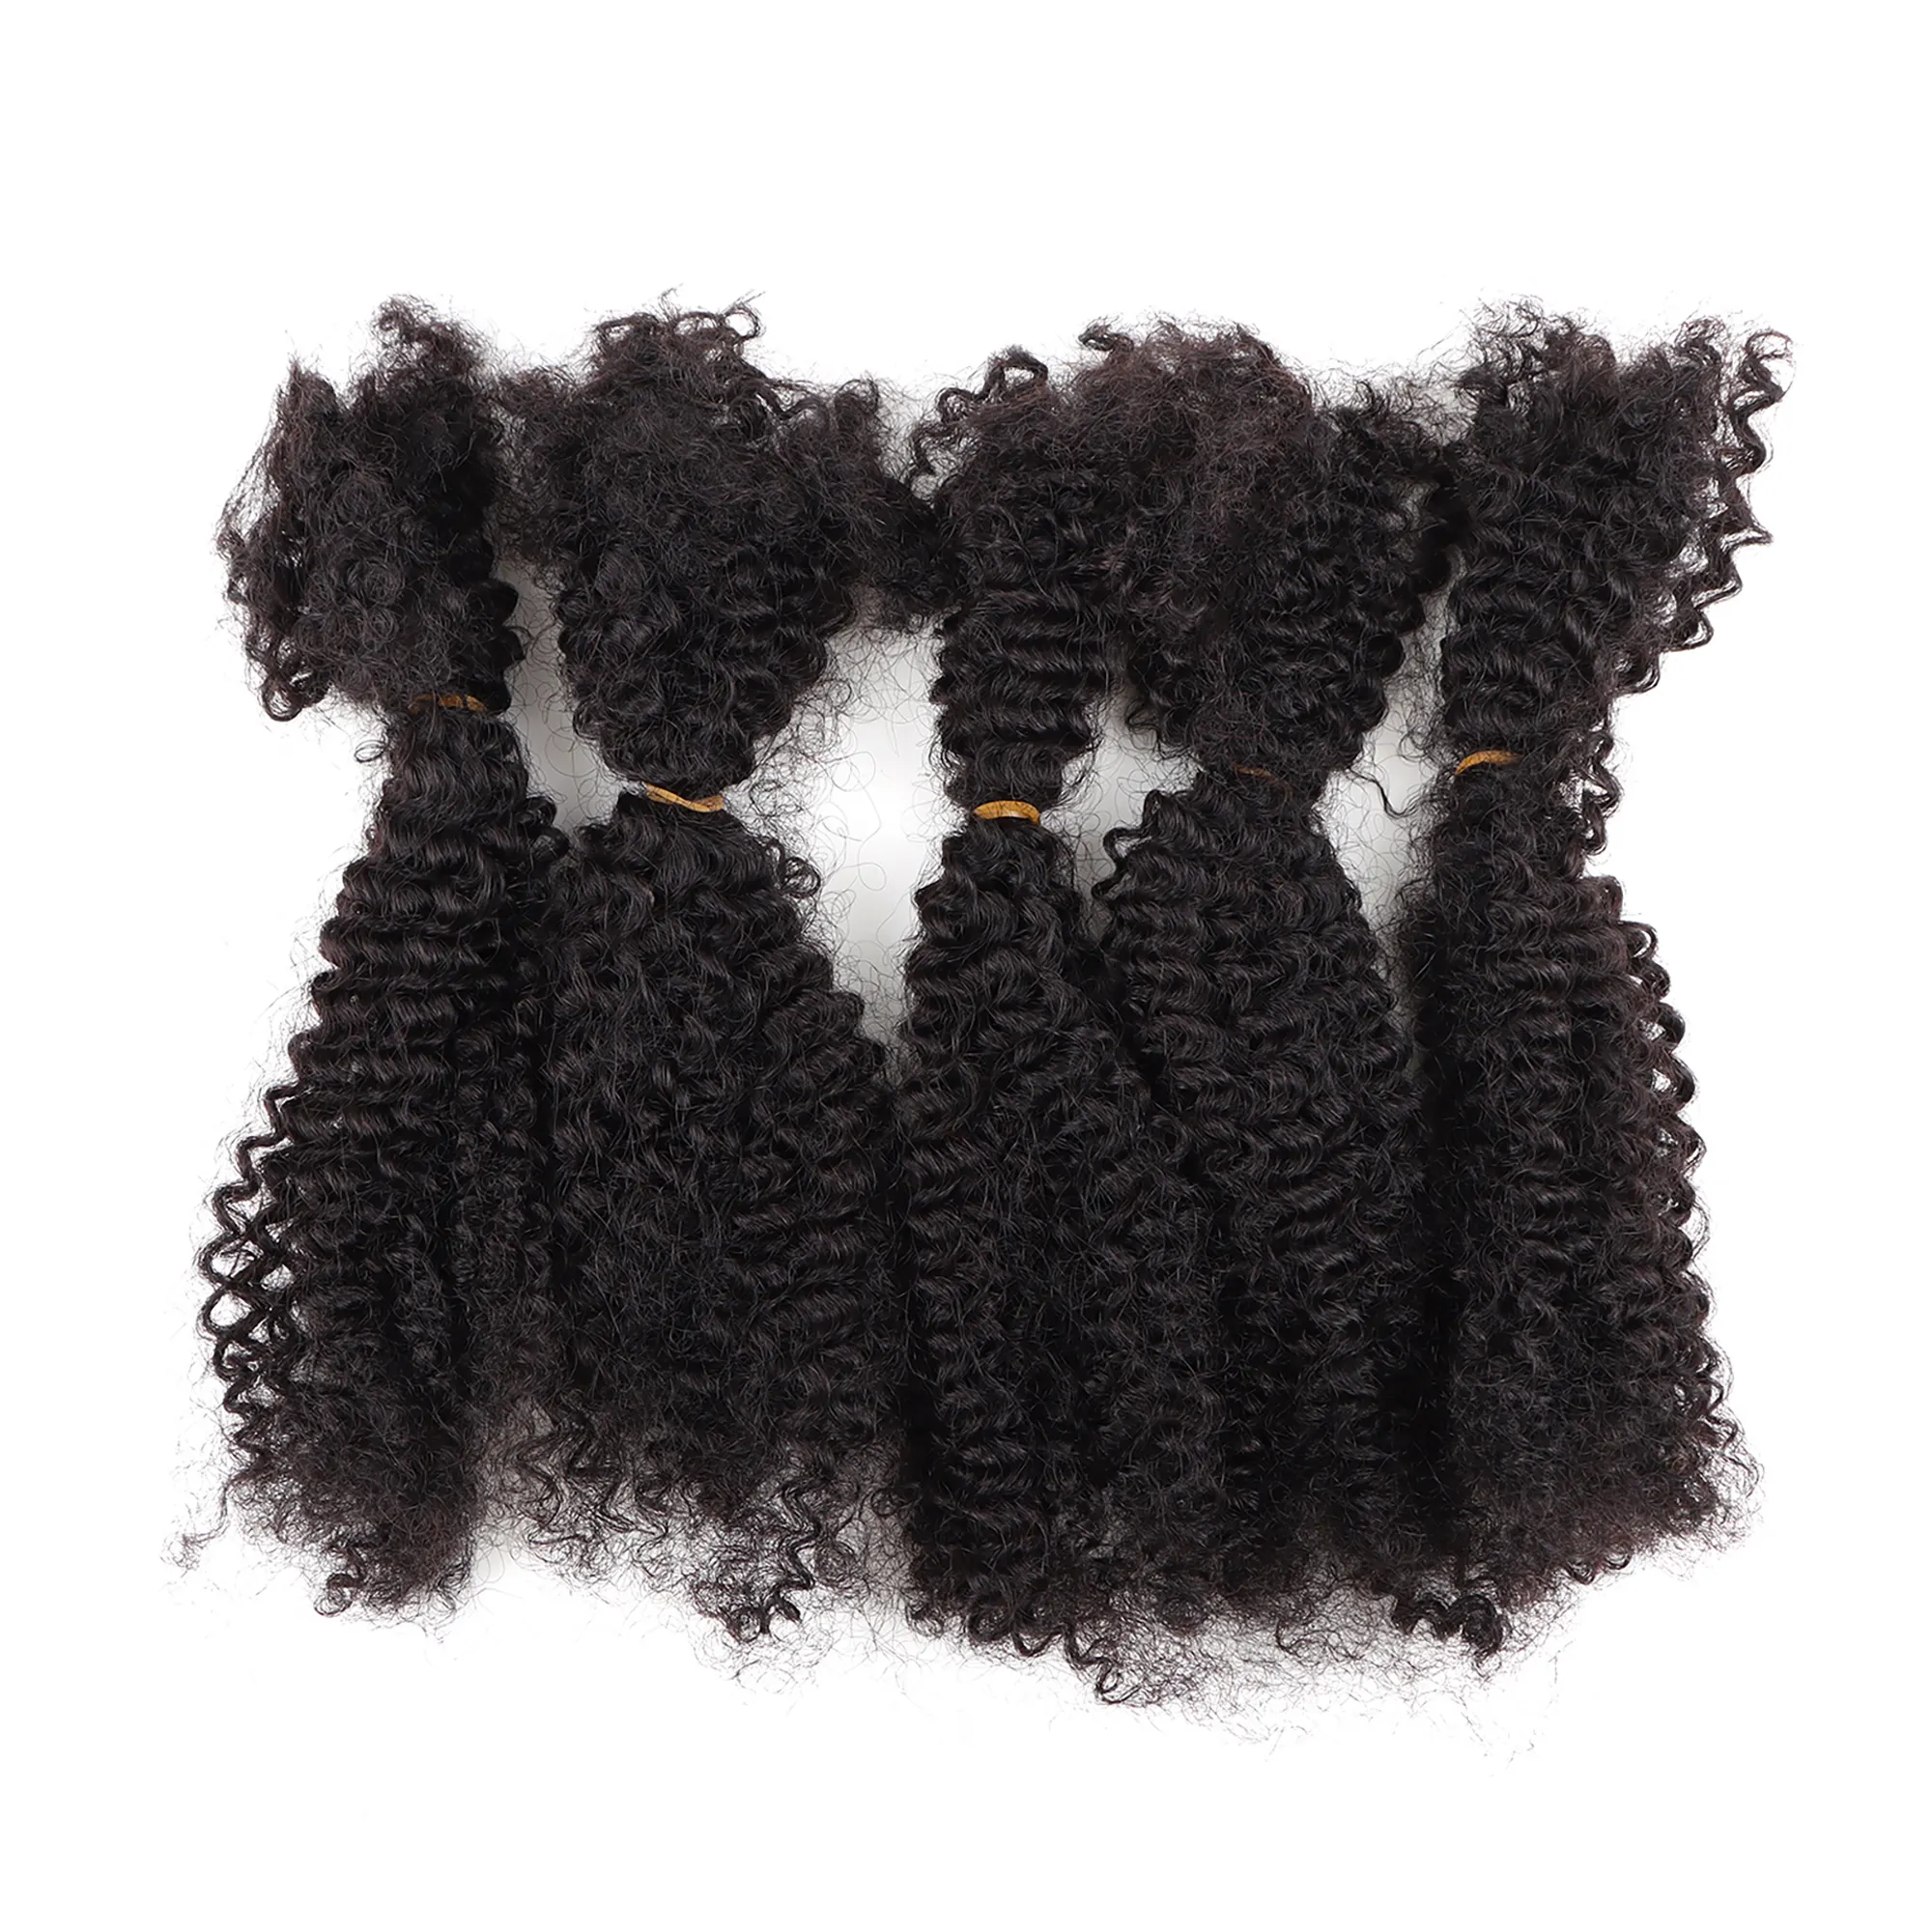 [Vast Dreads] venta al por mayor afro cURL Marley trenza cabello 4B 4c 100% cabello trenzado brasileño humano afro rizado cabello humano a granel